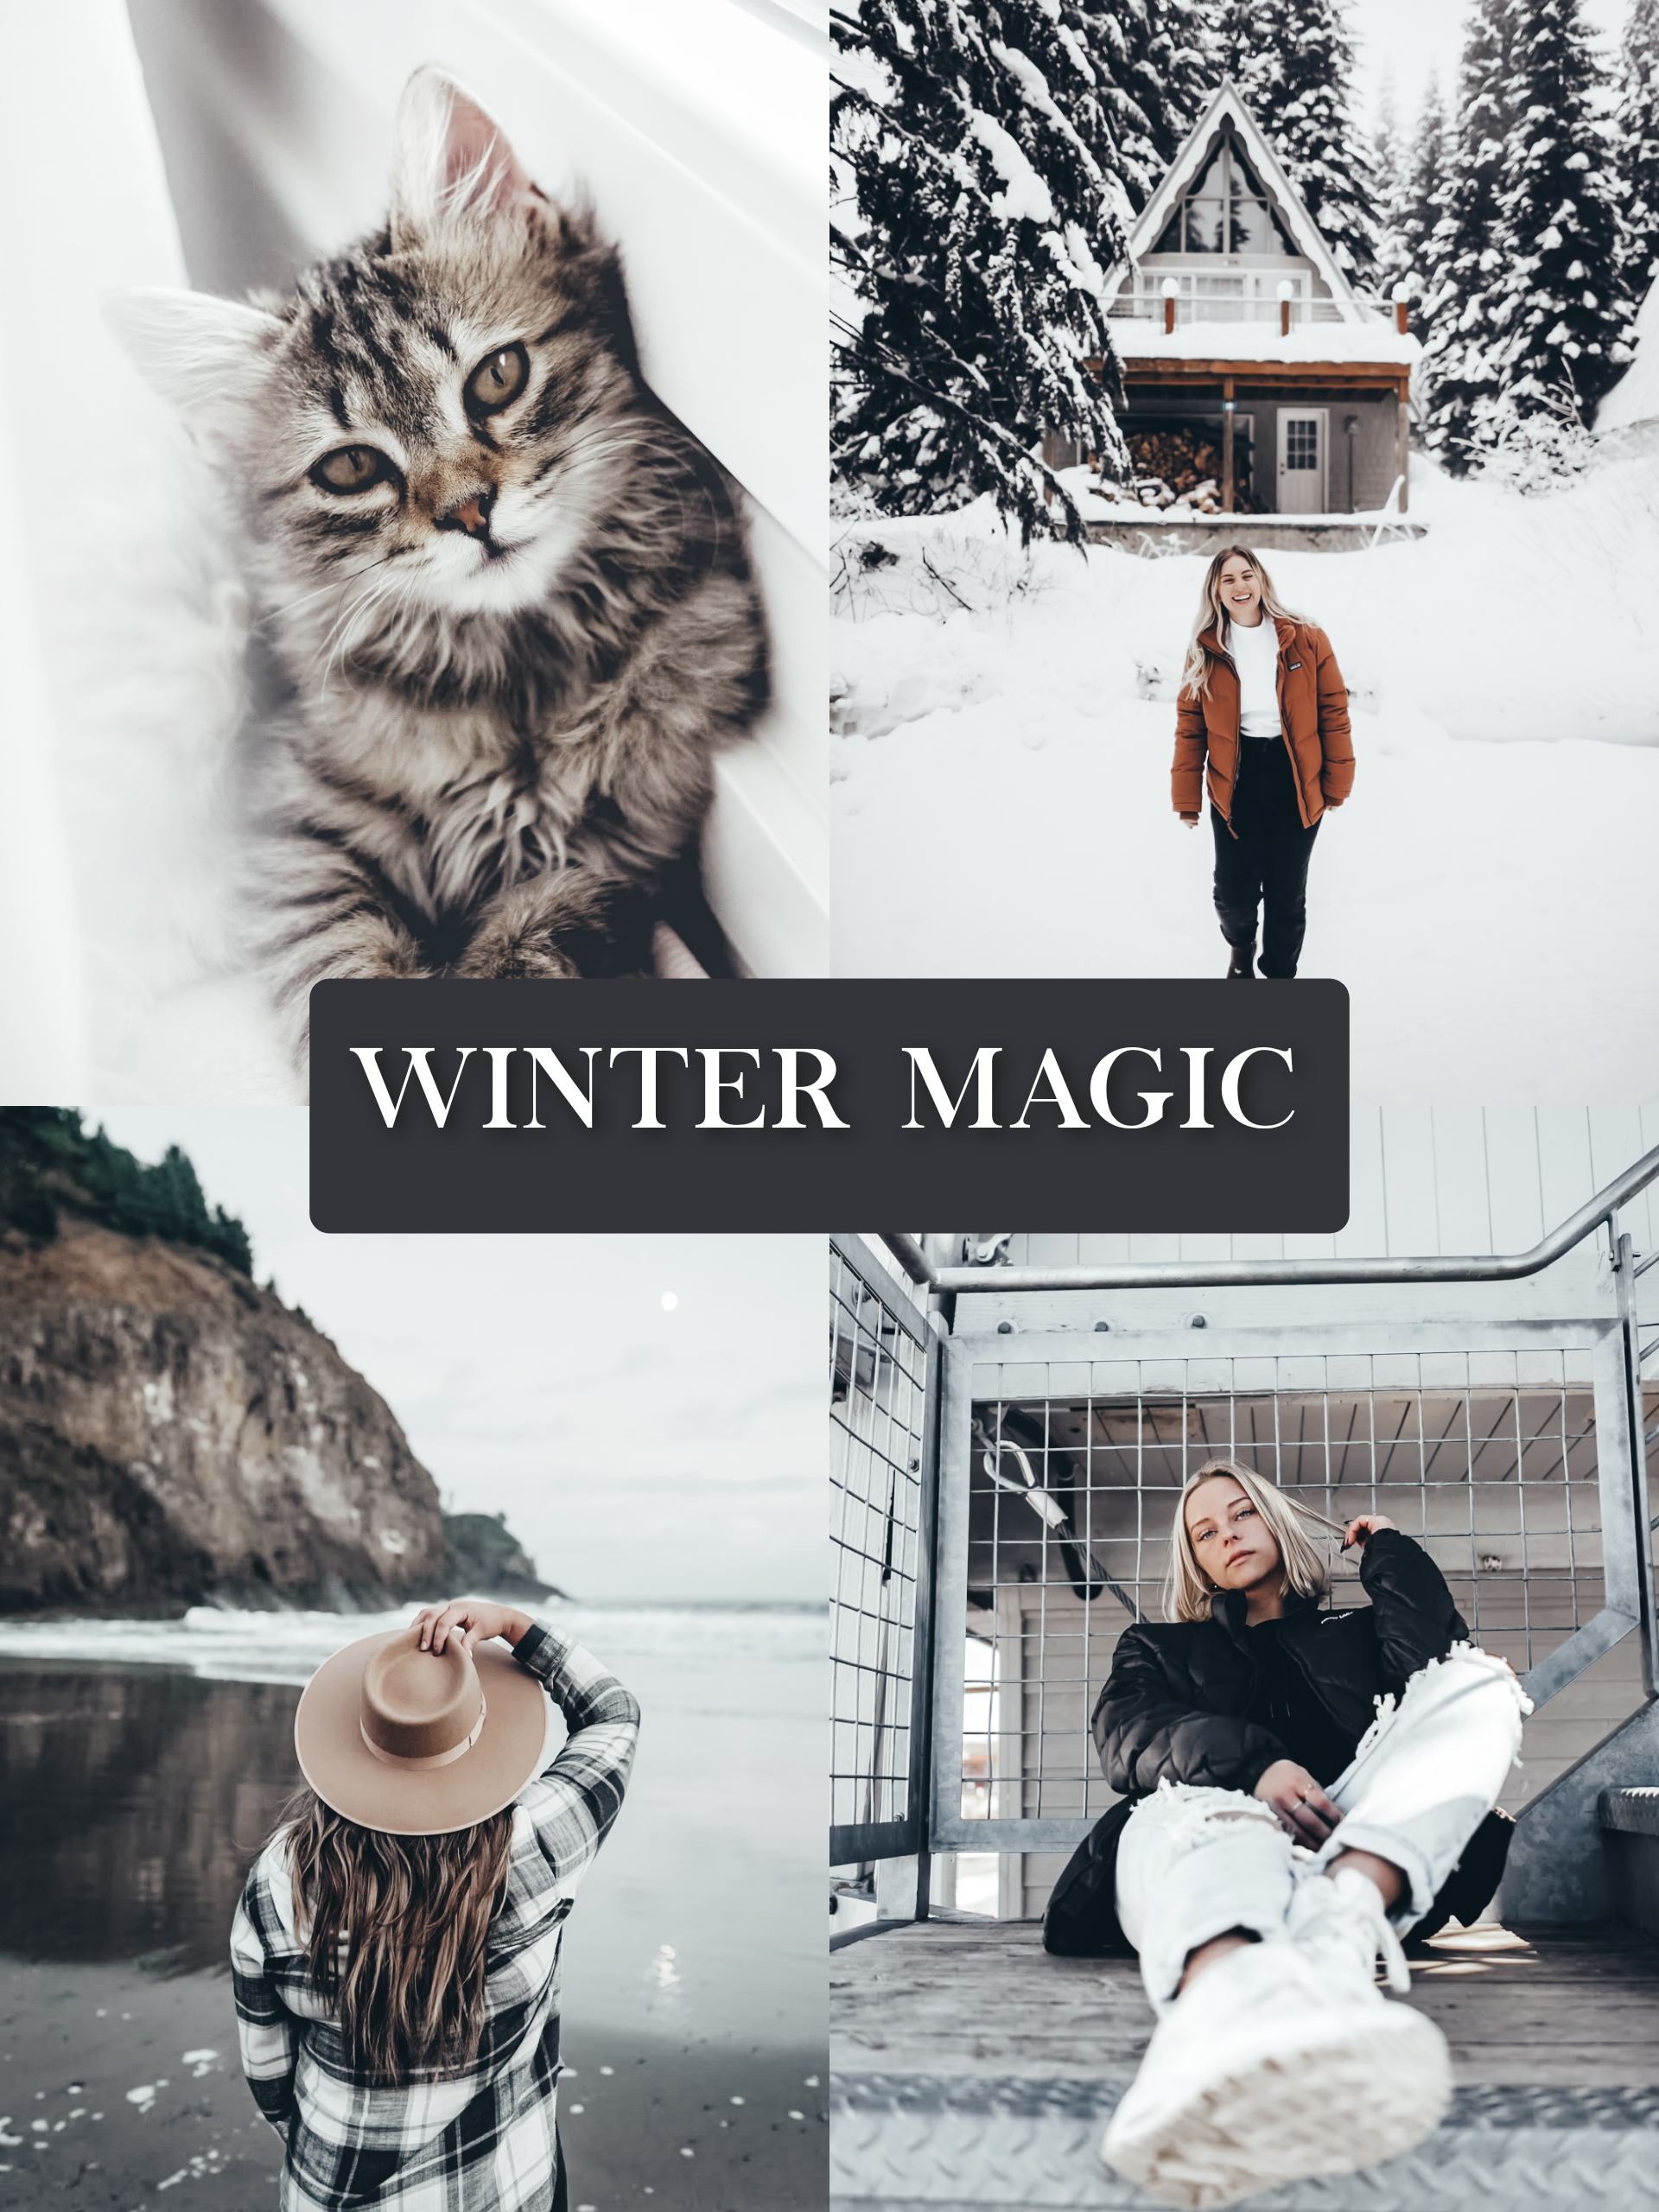 Winter Magic - One Click Filter